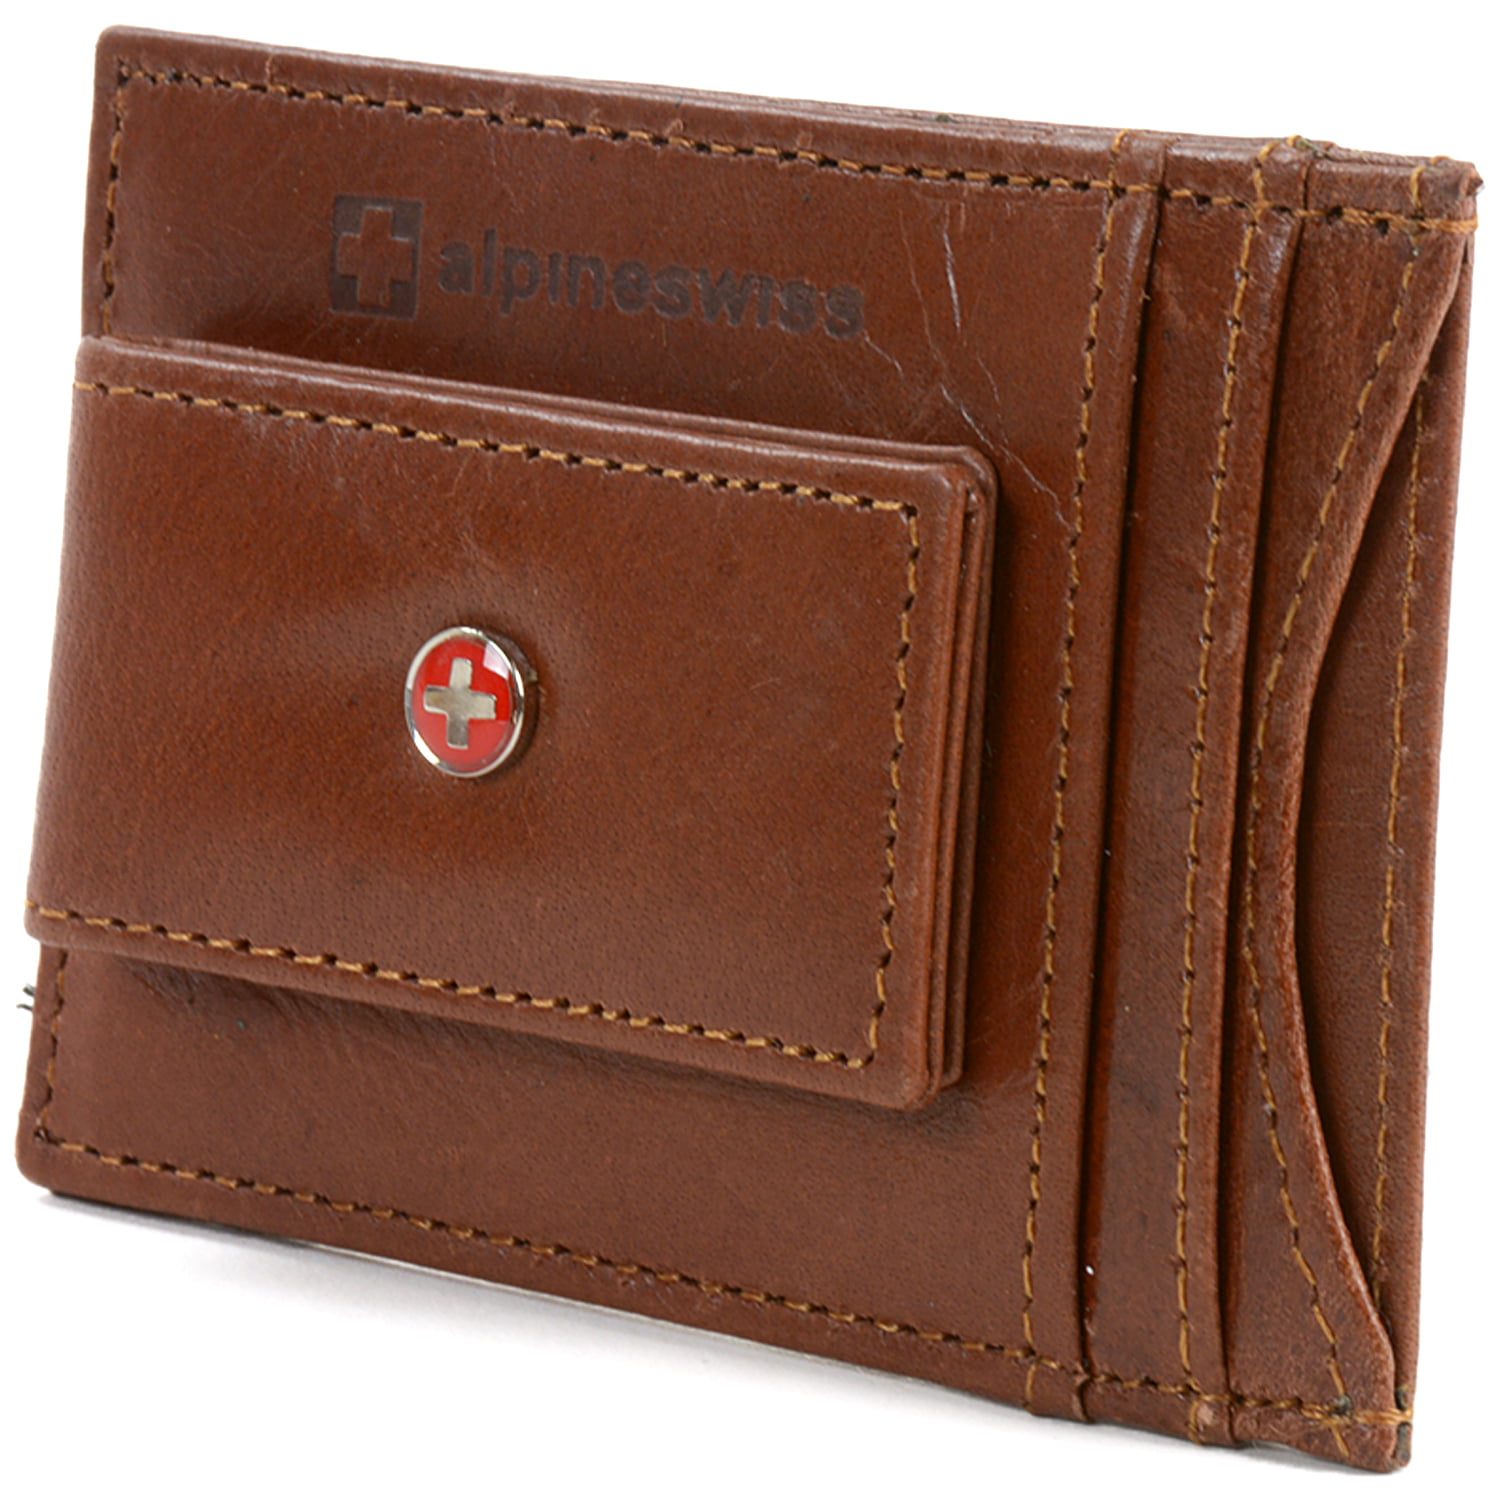 Alpine Swiss - AlpineSwiss Mens Leather Money Clip Magnet Front Pocket Wallet Slim ID Card Case ...